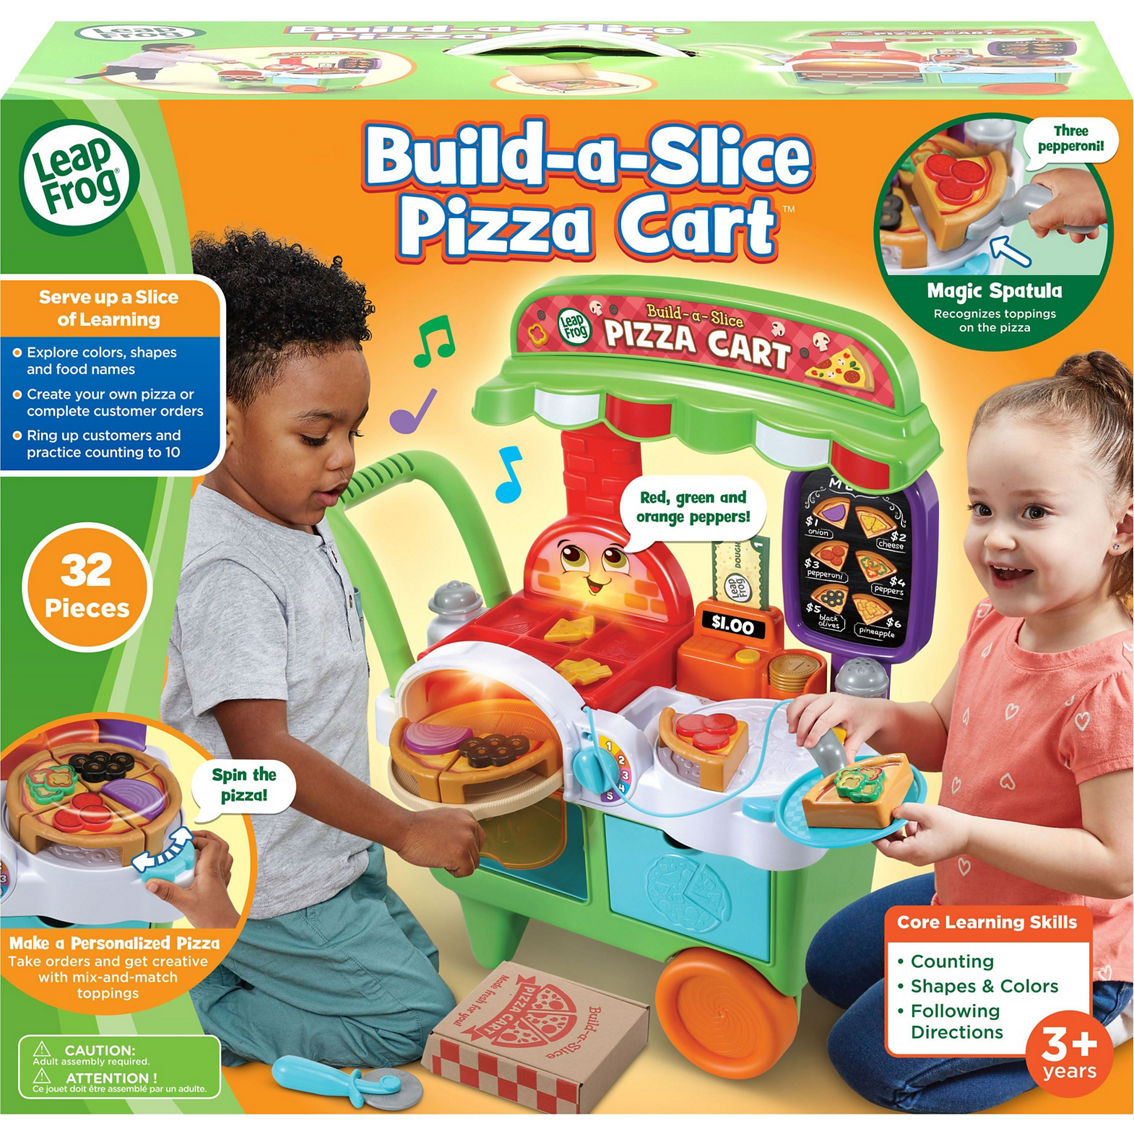 LeapFrog Build-a-Slice Pizza Cart